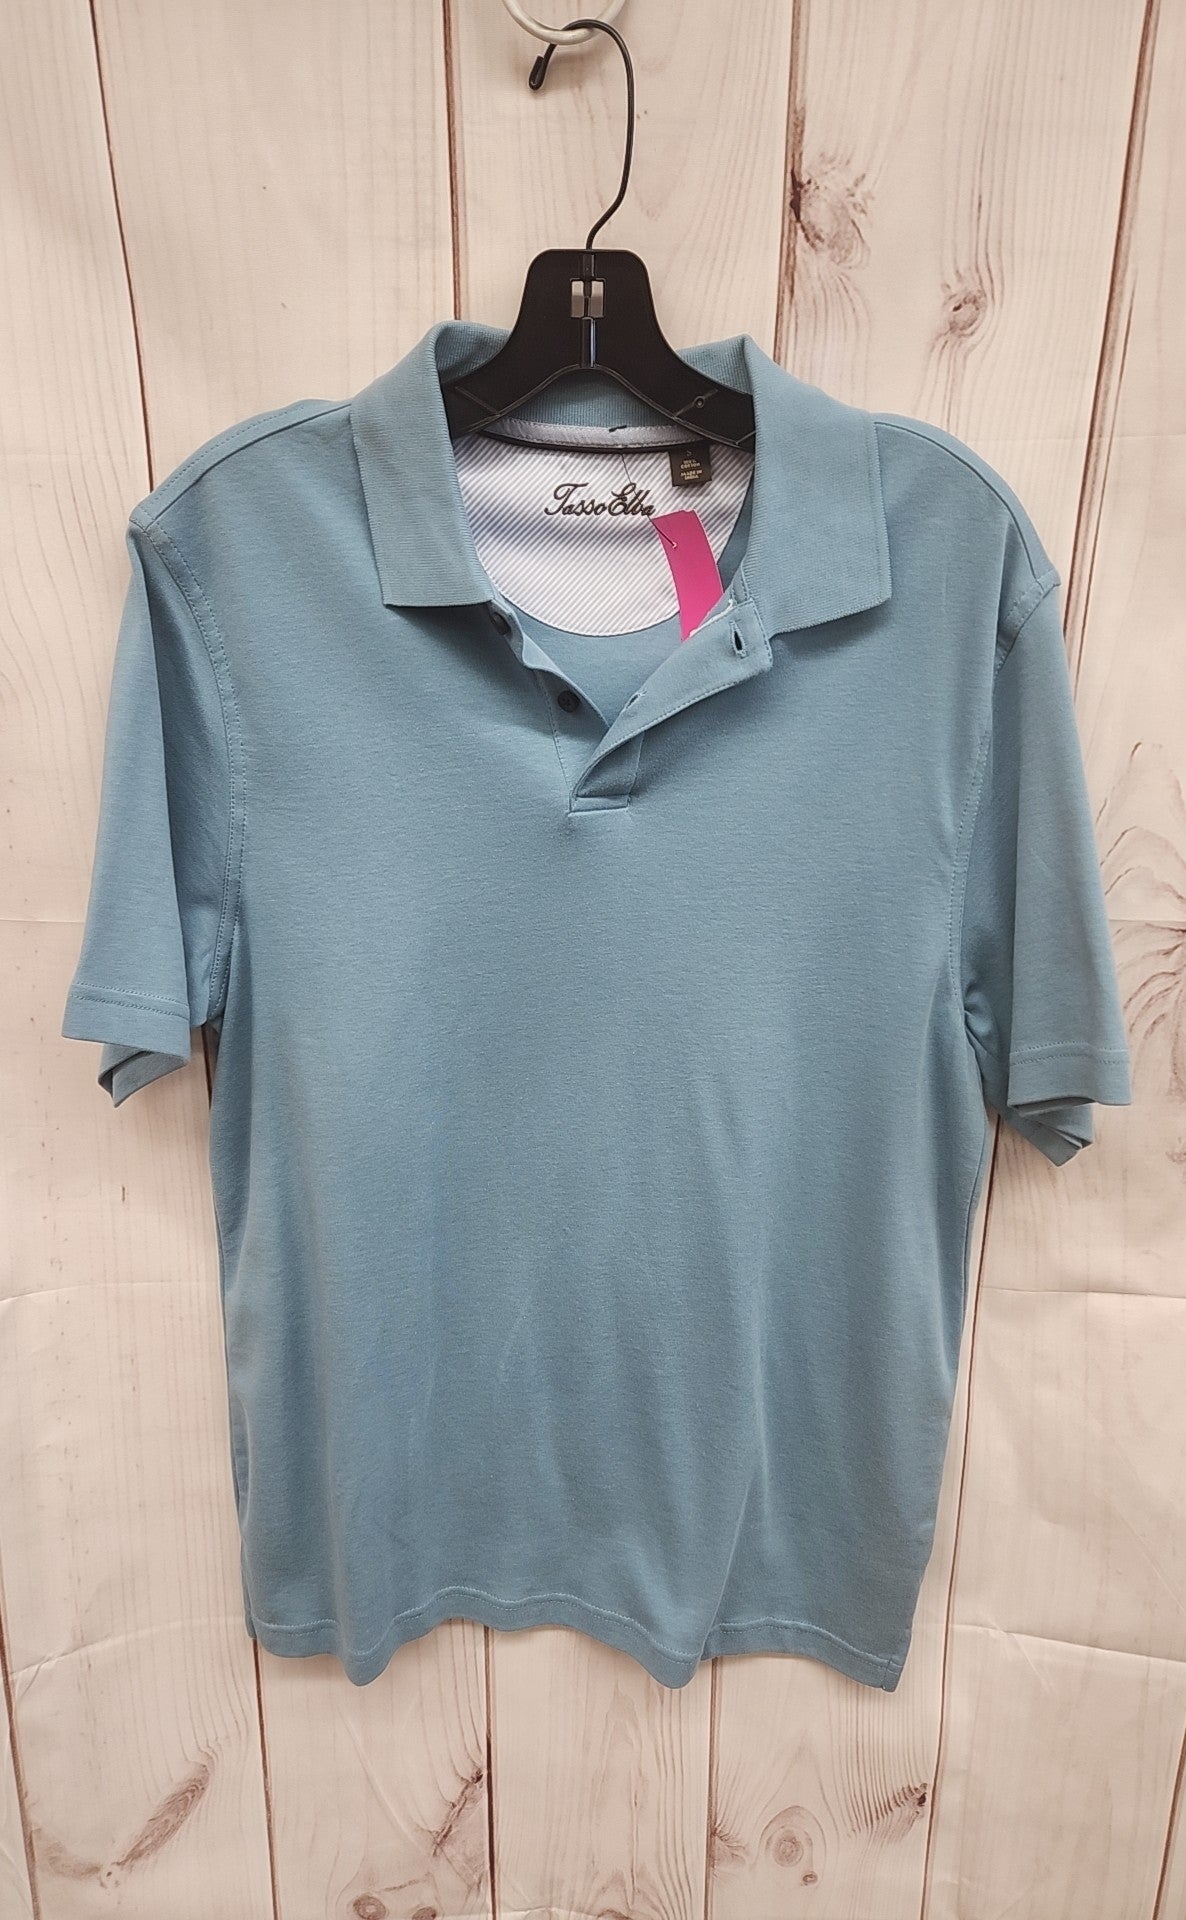 Tasso Elba Men's Size S Turquoise Shirt